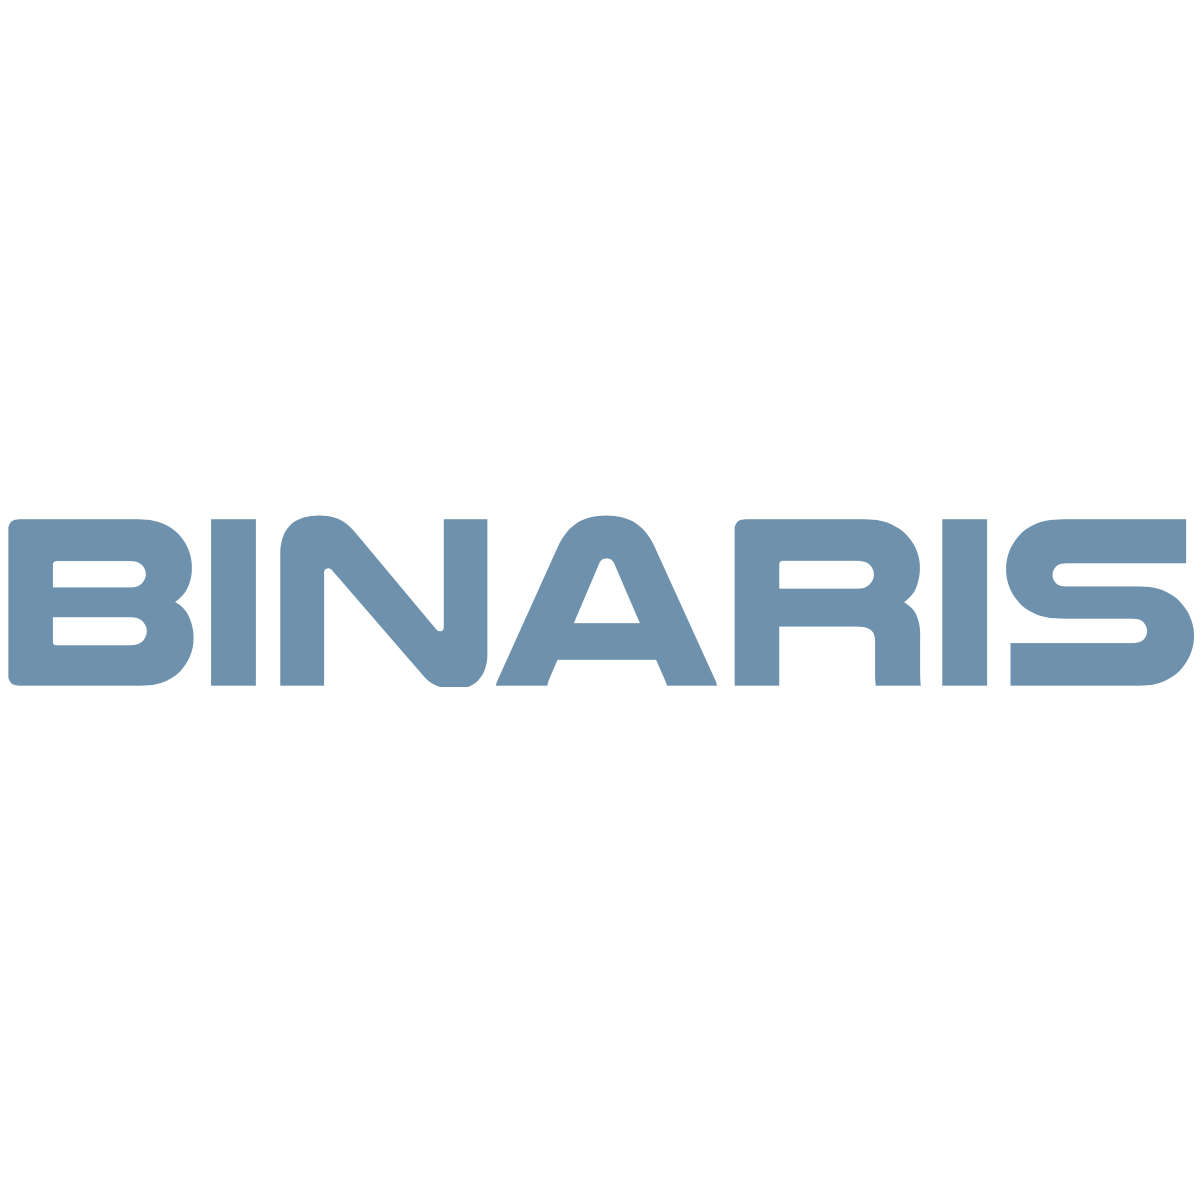 Binaris - Crunchbase Company Profile & Funding